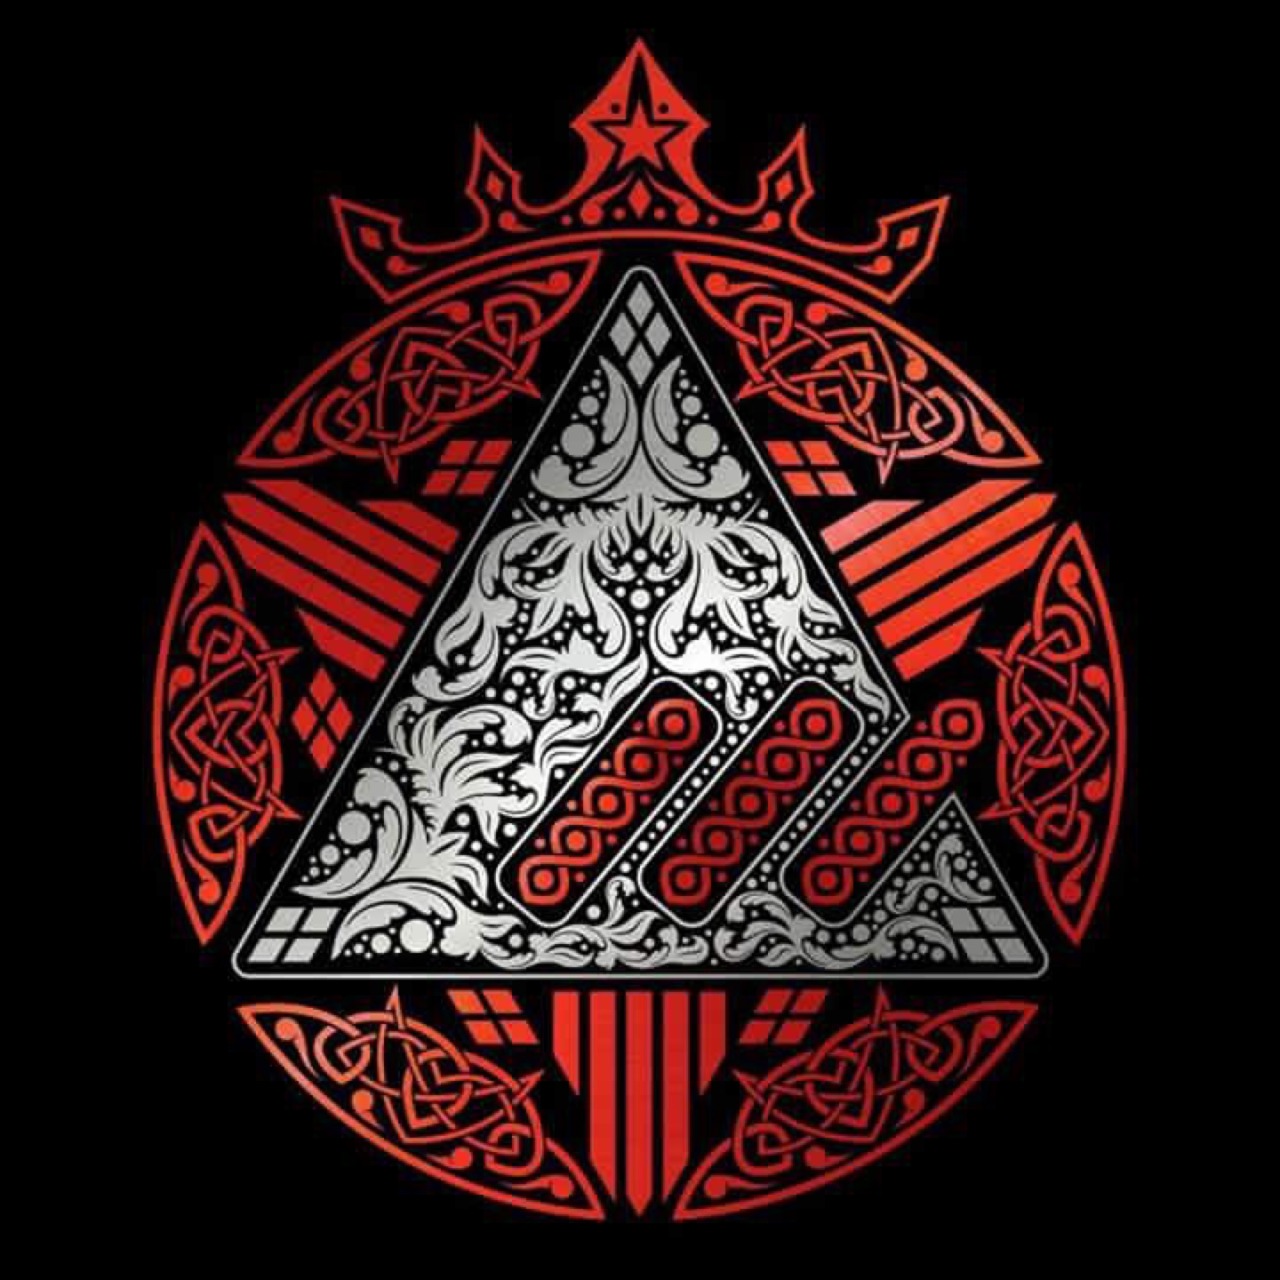 Amazing faction logo designs. I do not take... - the World ...